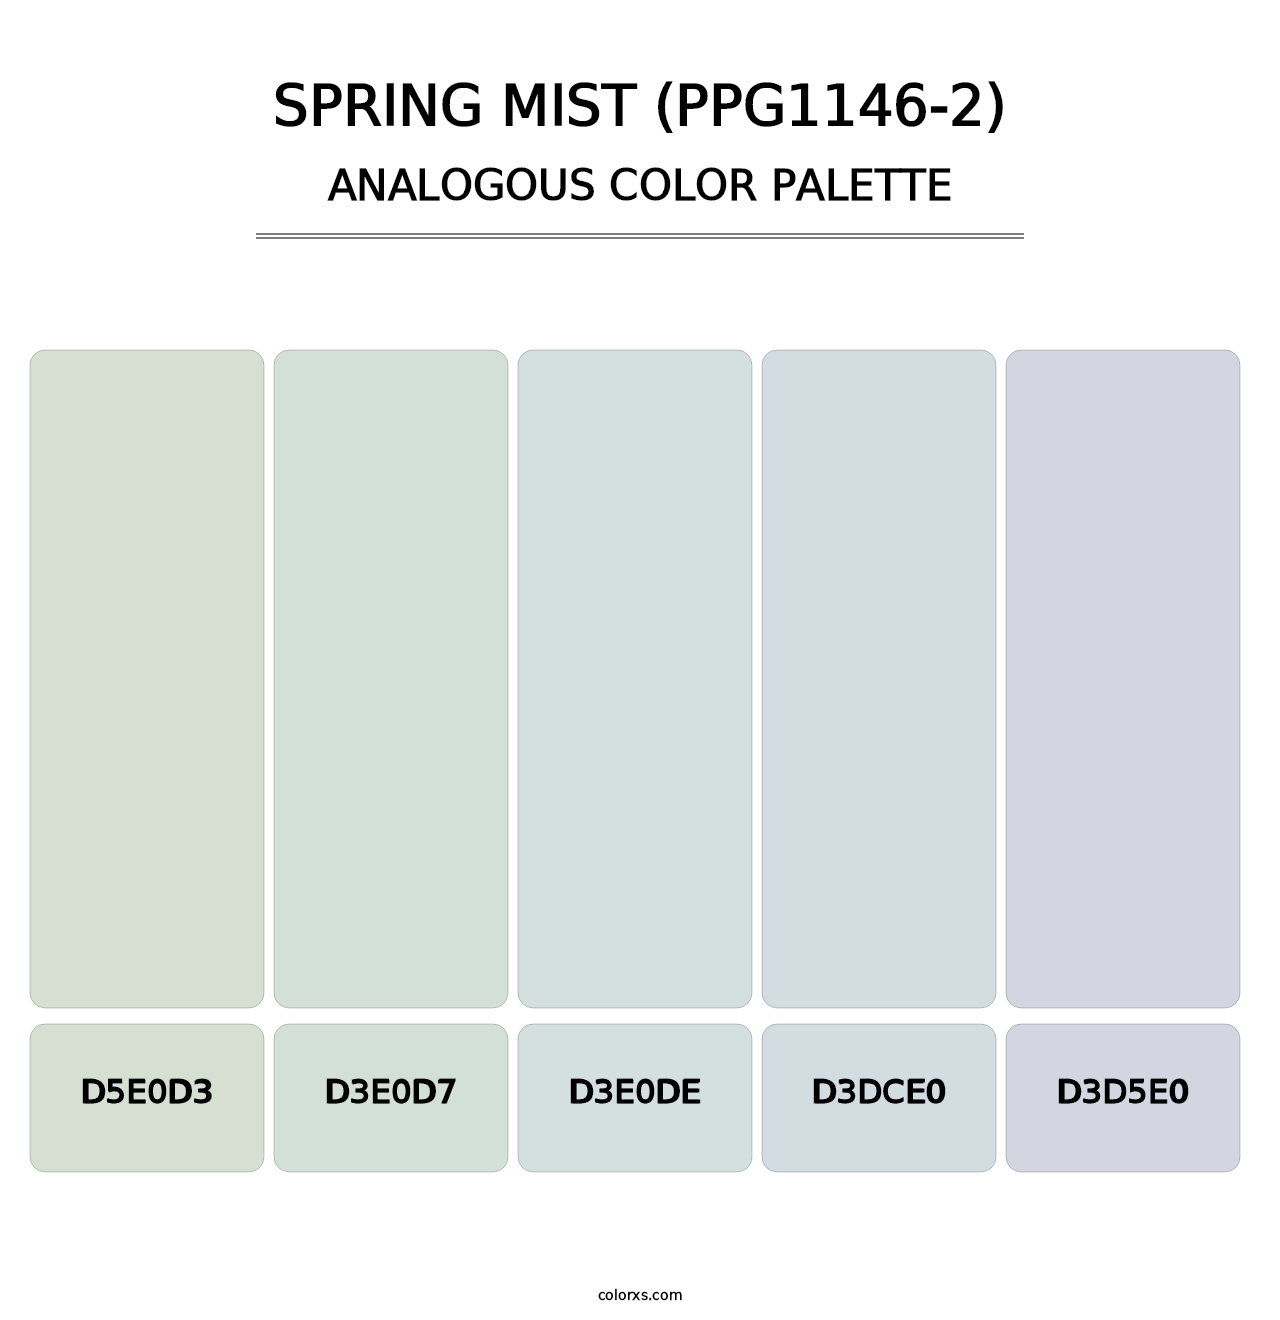 Spring Mist (PPG1146-2) - Analogous Color Palette